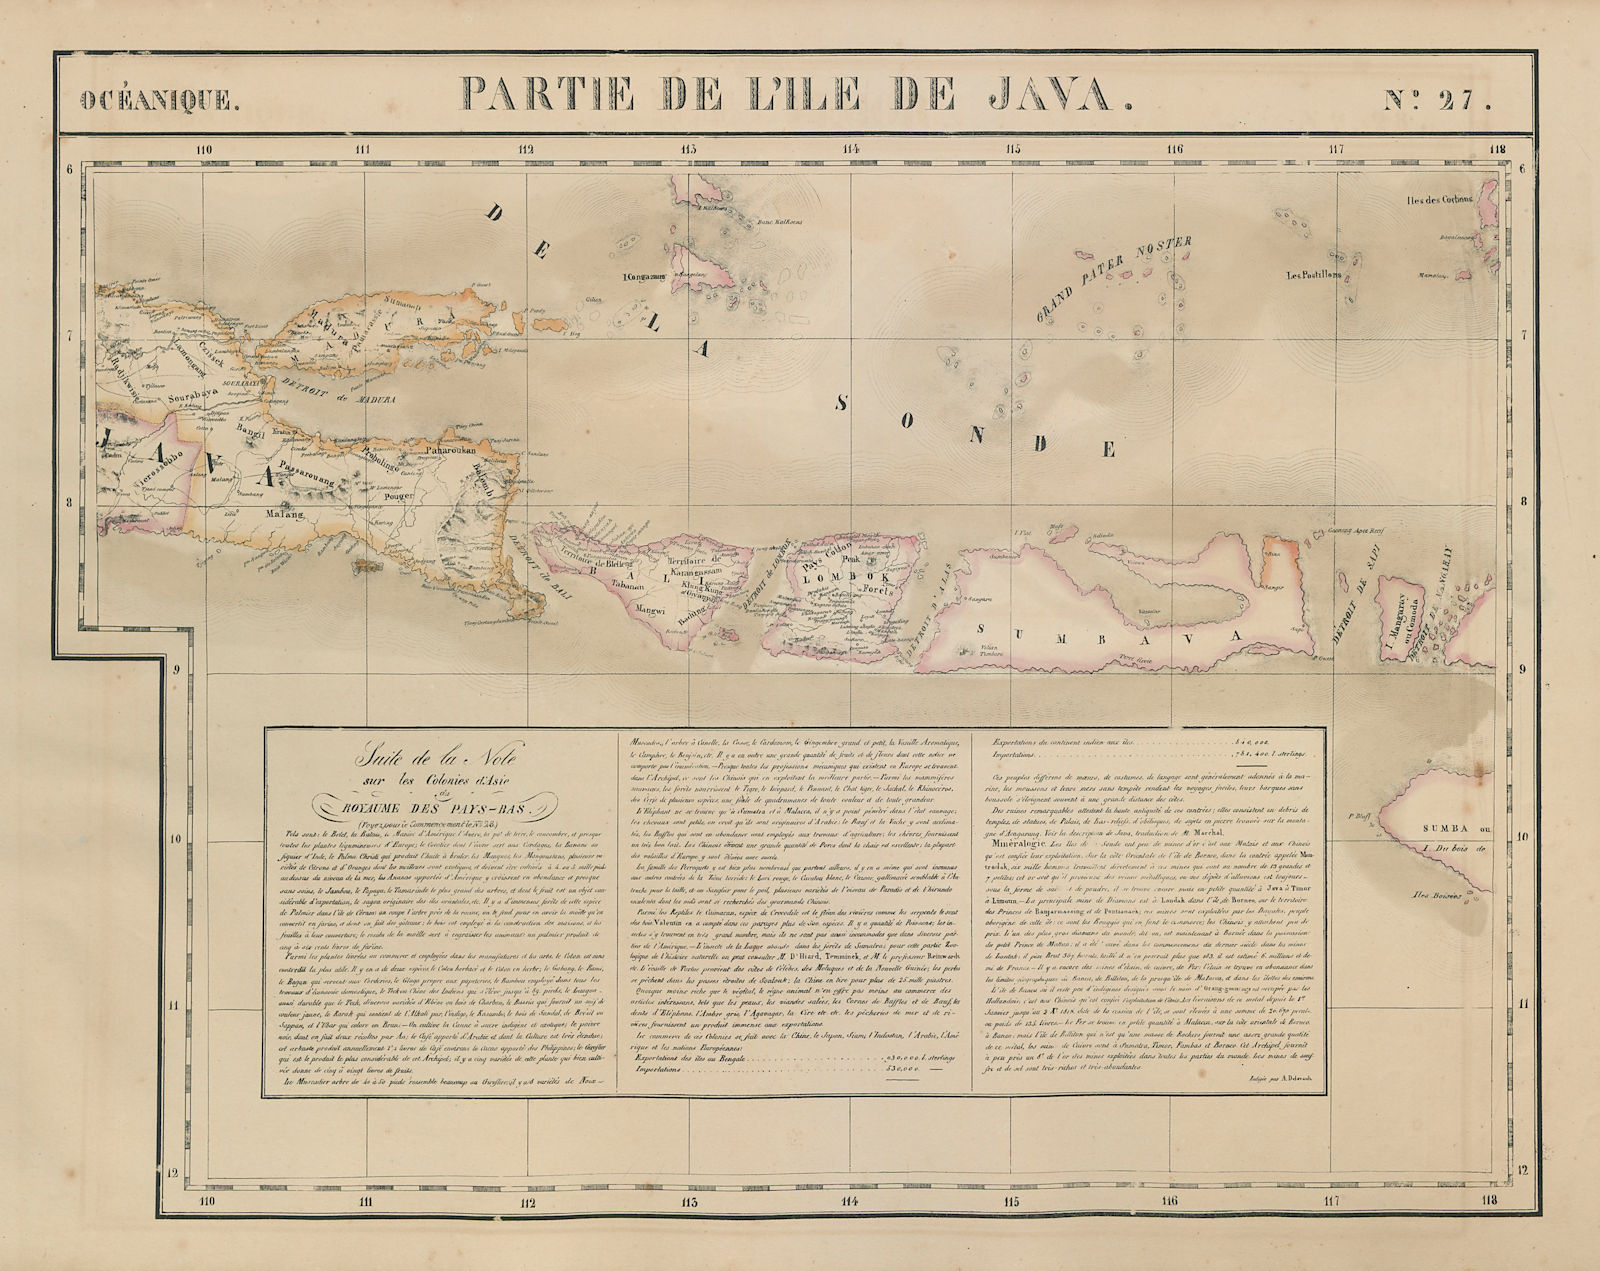 Océanique. Partie de l'ile de Java #27 Bali Lombok Sumbawa VANDERMAELEN 1827 map